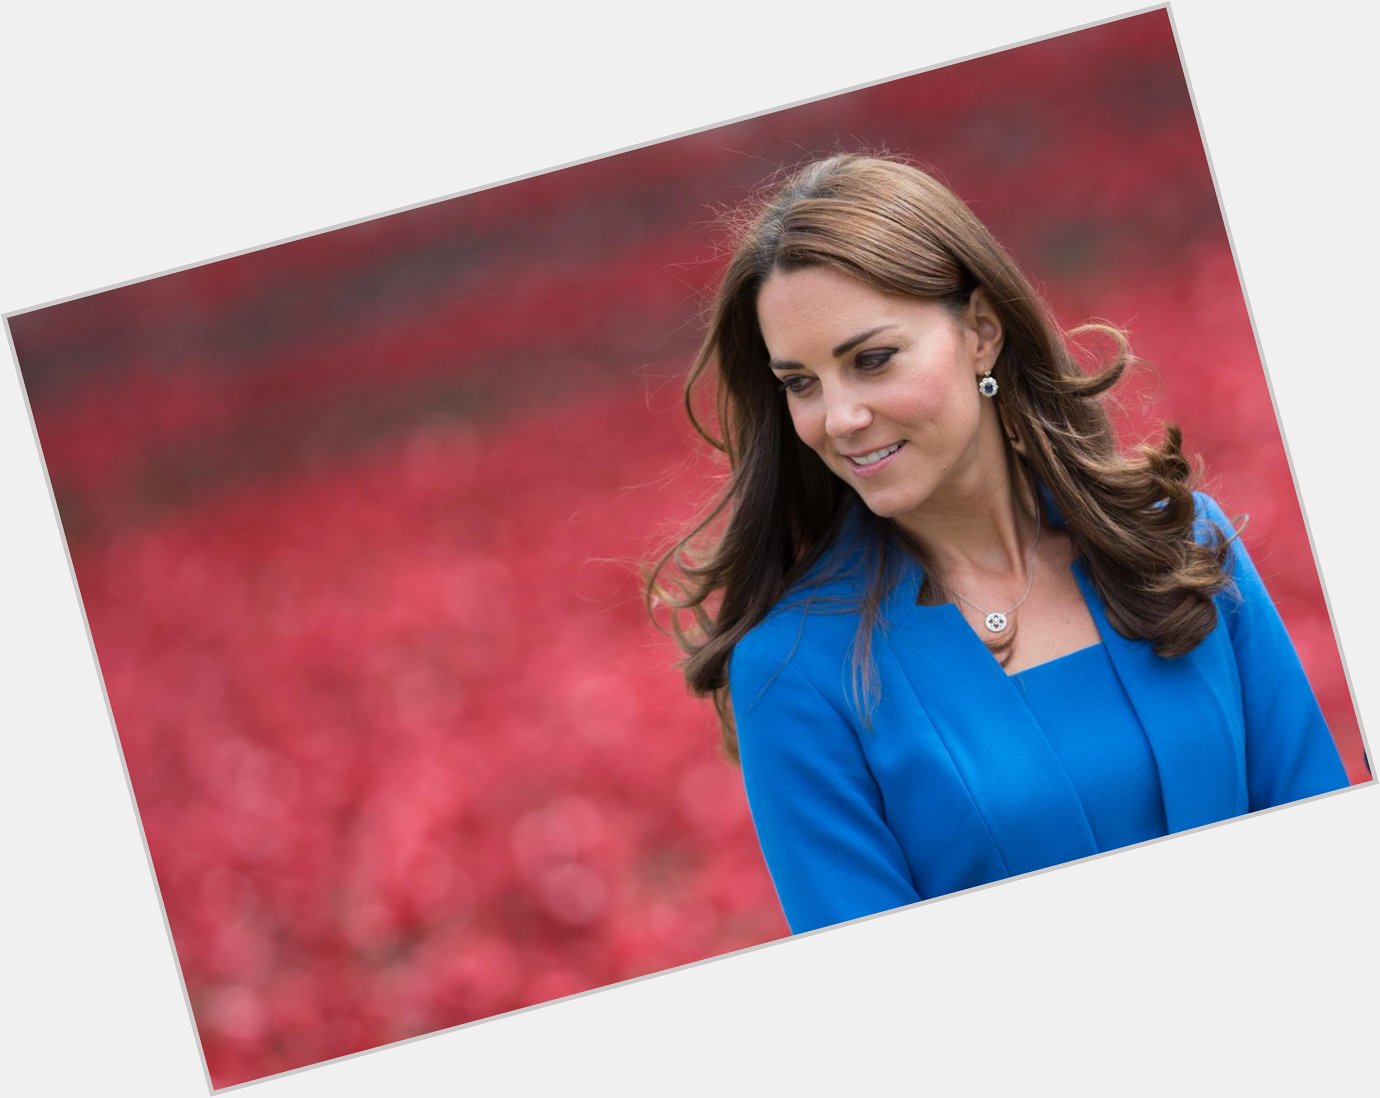 Happy Birthday to Kate Middleton! The Duchess of Cambridge turns 33 today. 